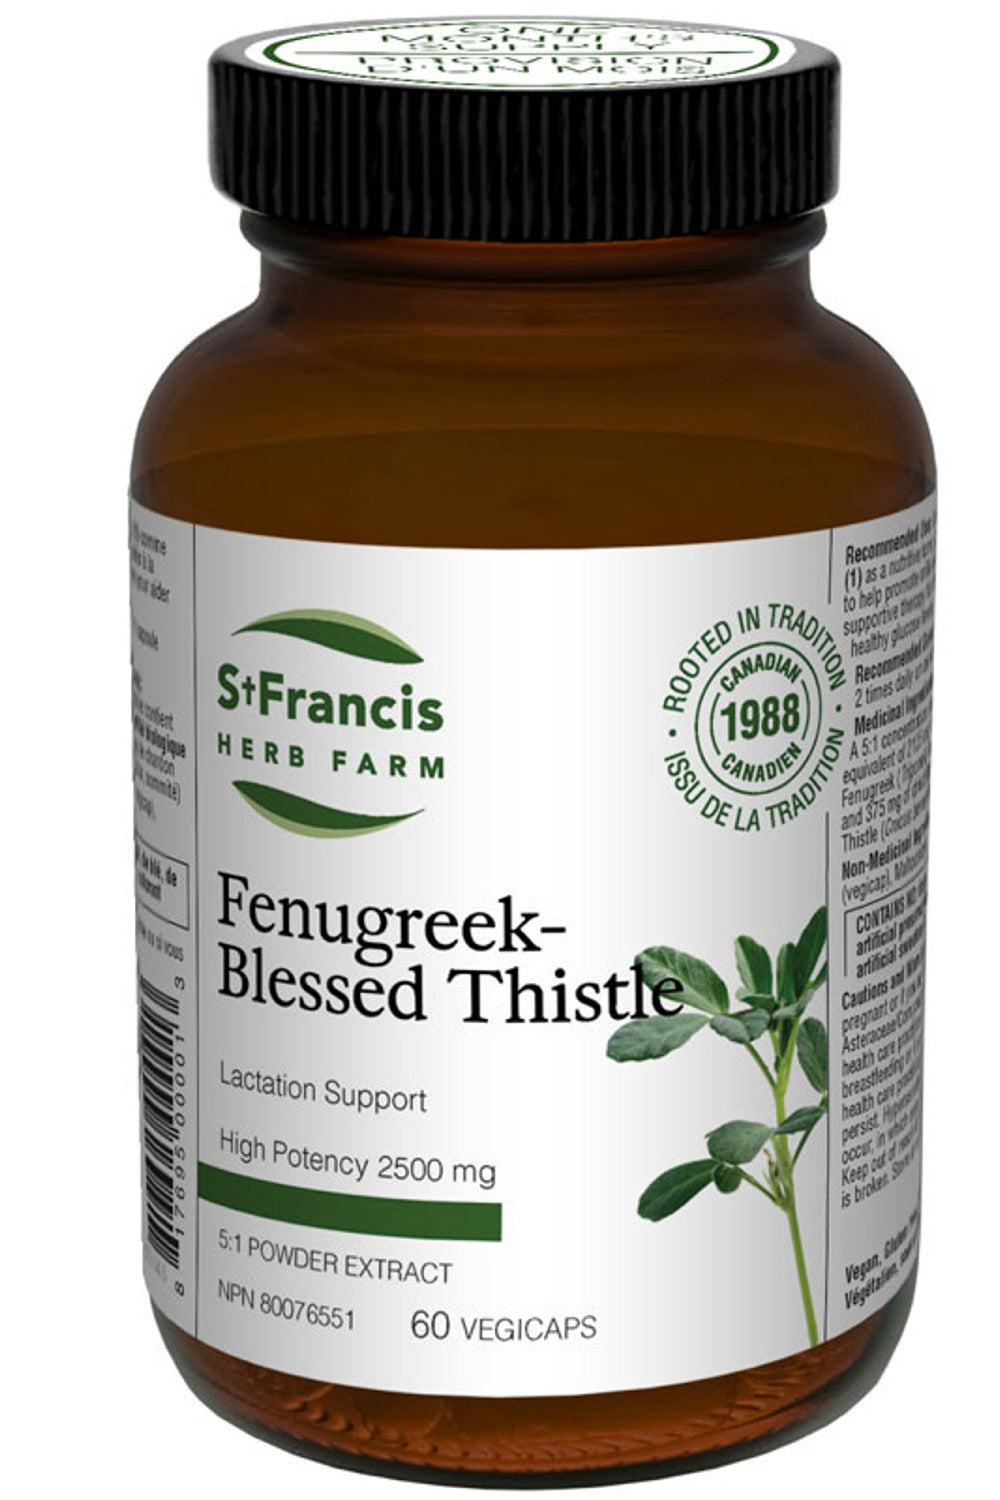 ST FRANCIS HERB FARM Fenugreek Blessed Thistle (500 mg - 60 caps)